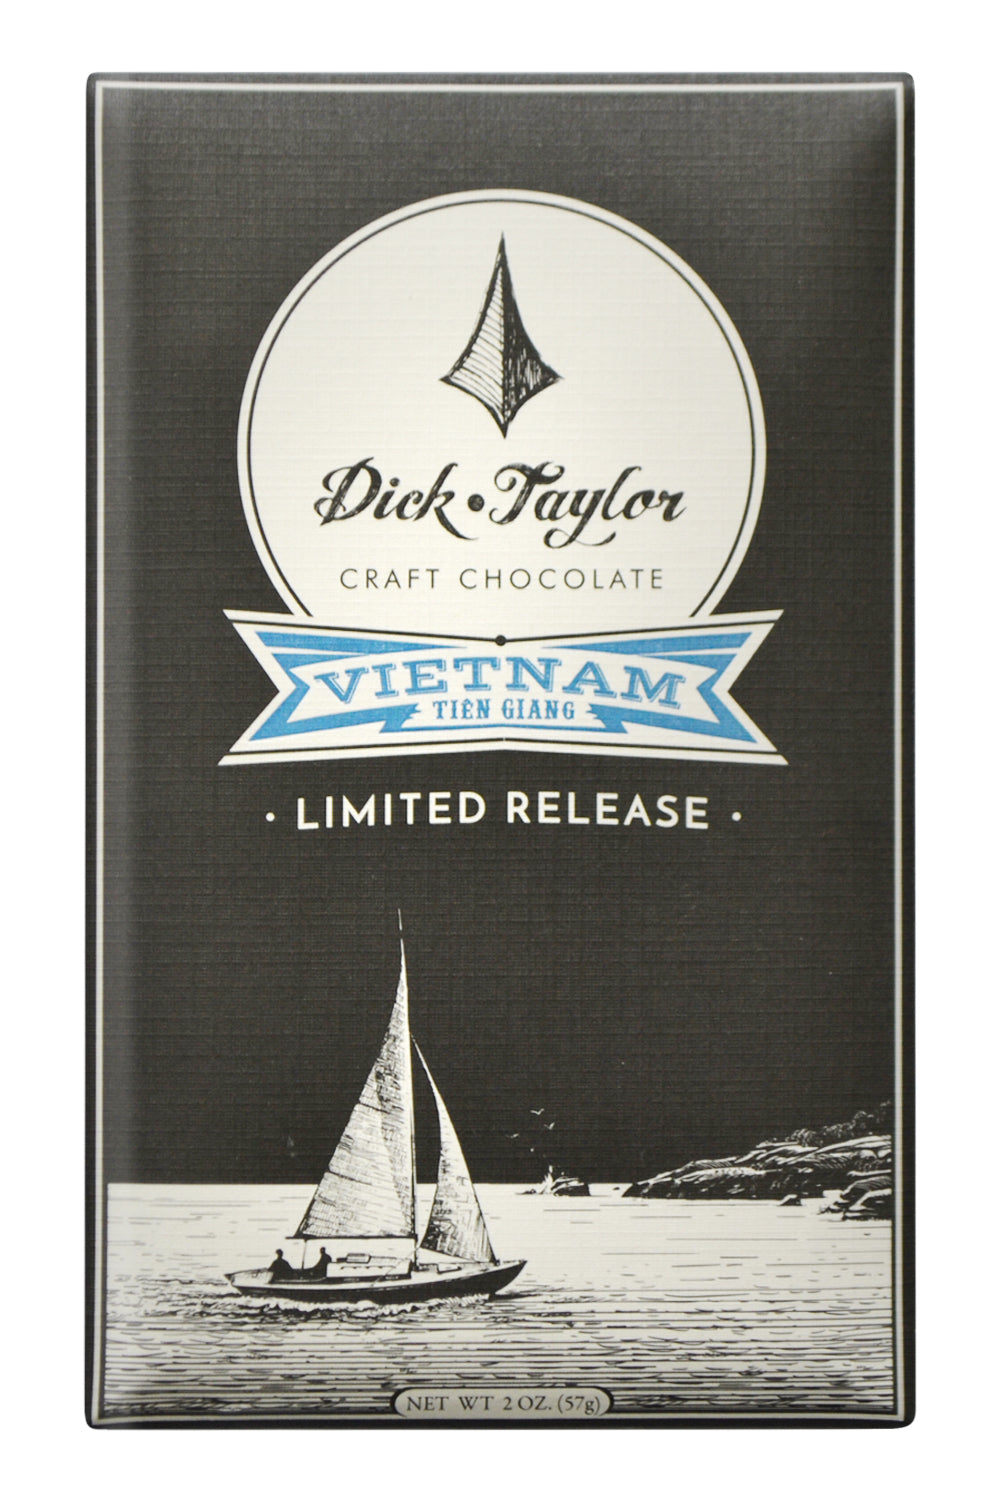 Dick Taylor Dark Chocolate - Vietnam Tiên Giang - Limited Release